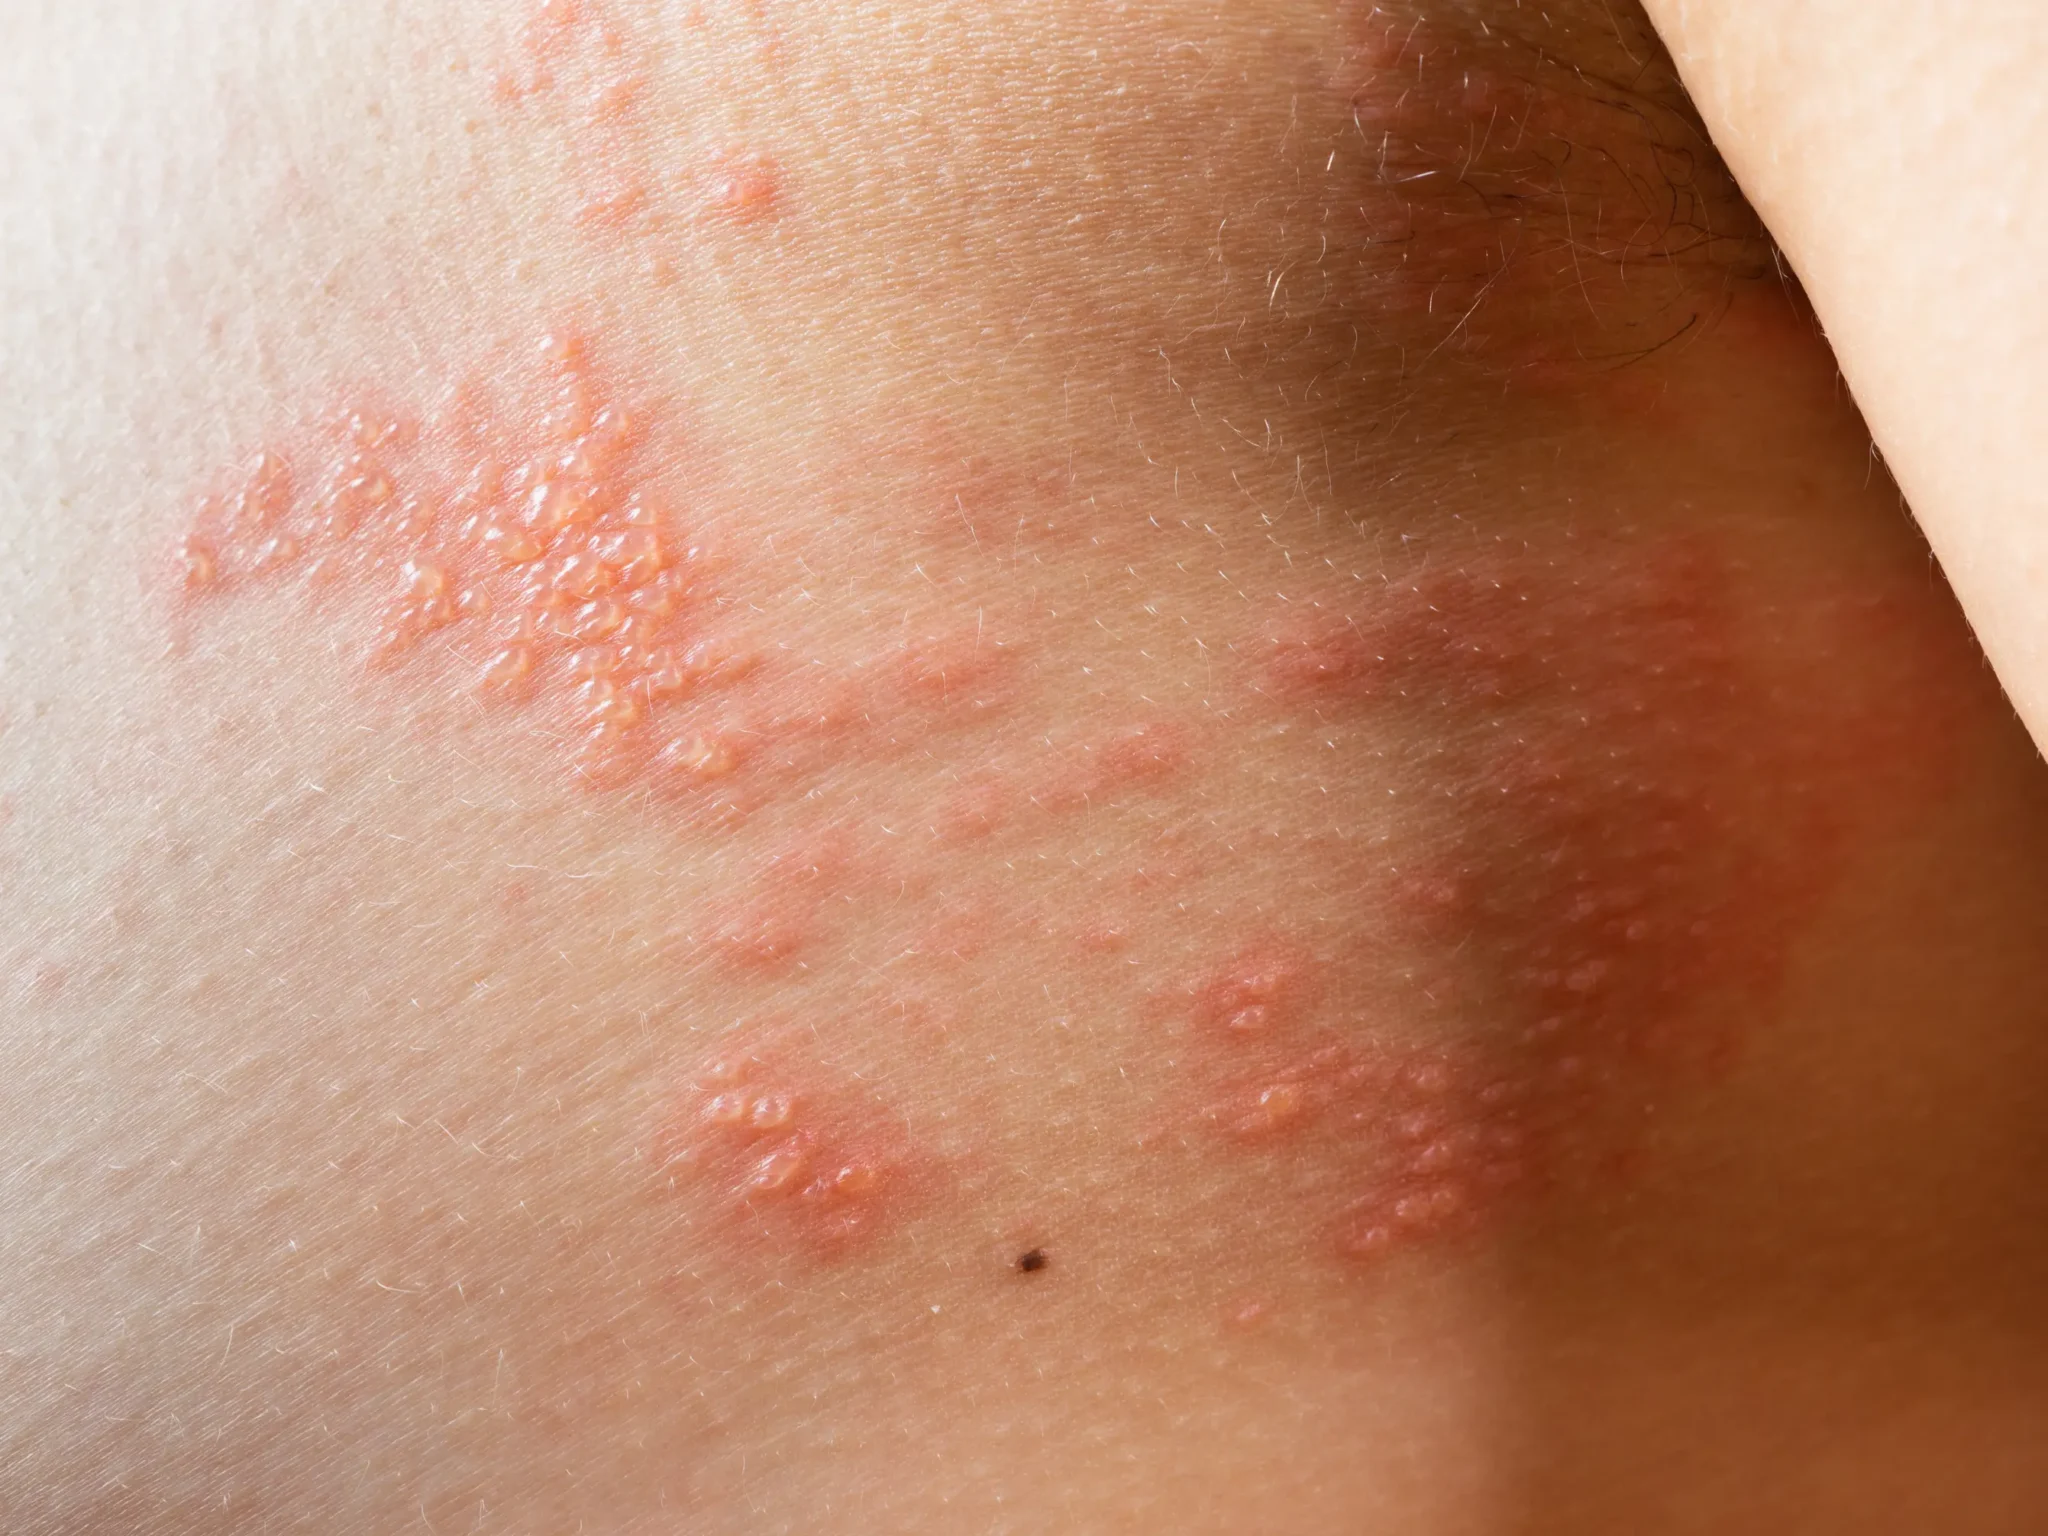 dermatiti ed eruzioni cutanee, i sintomi dell'allergia all'istamina